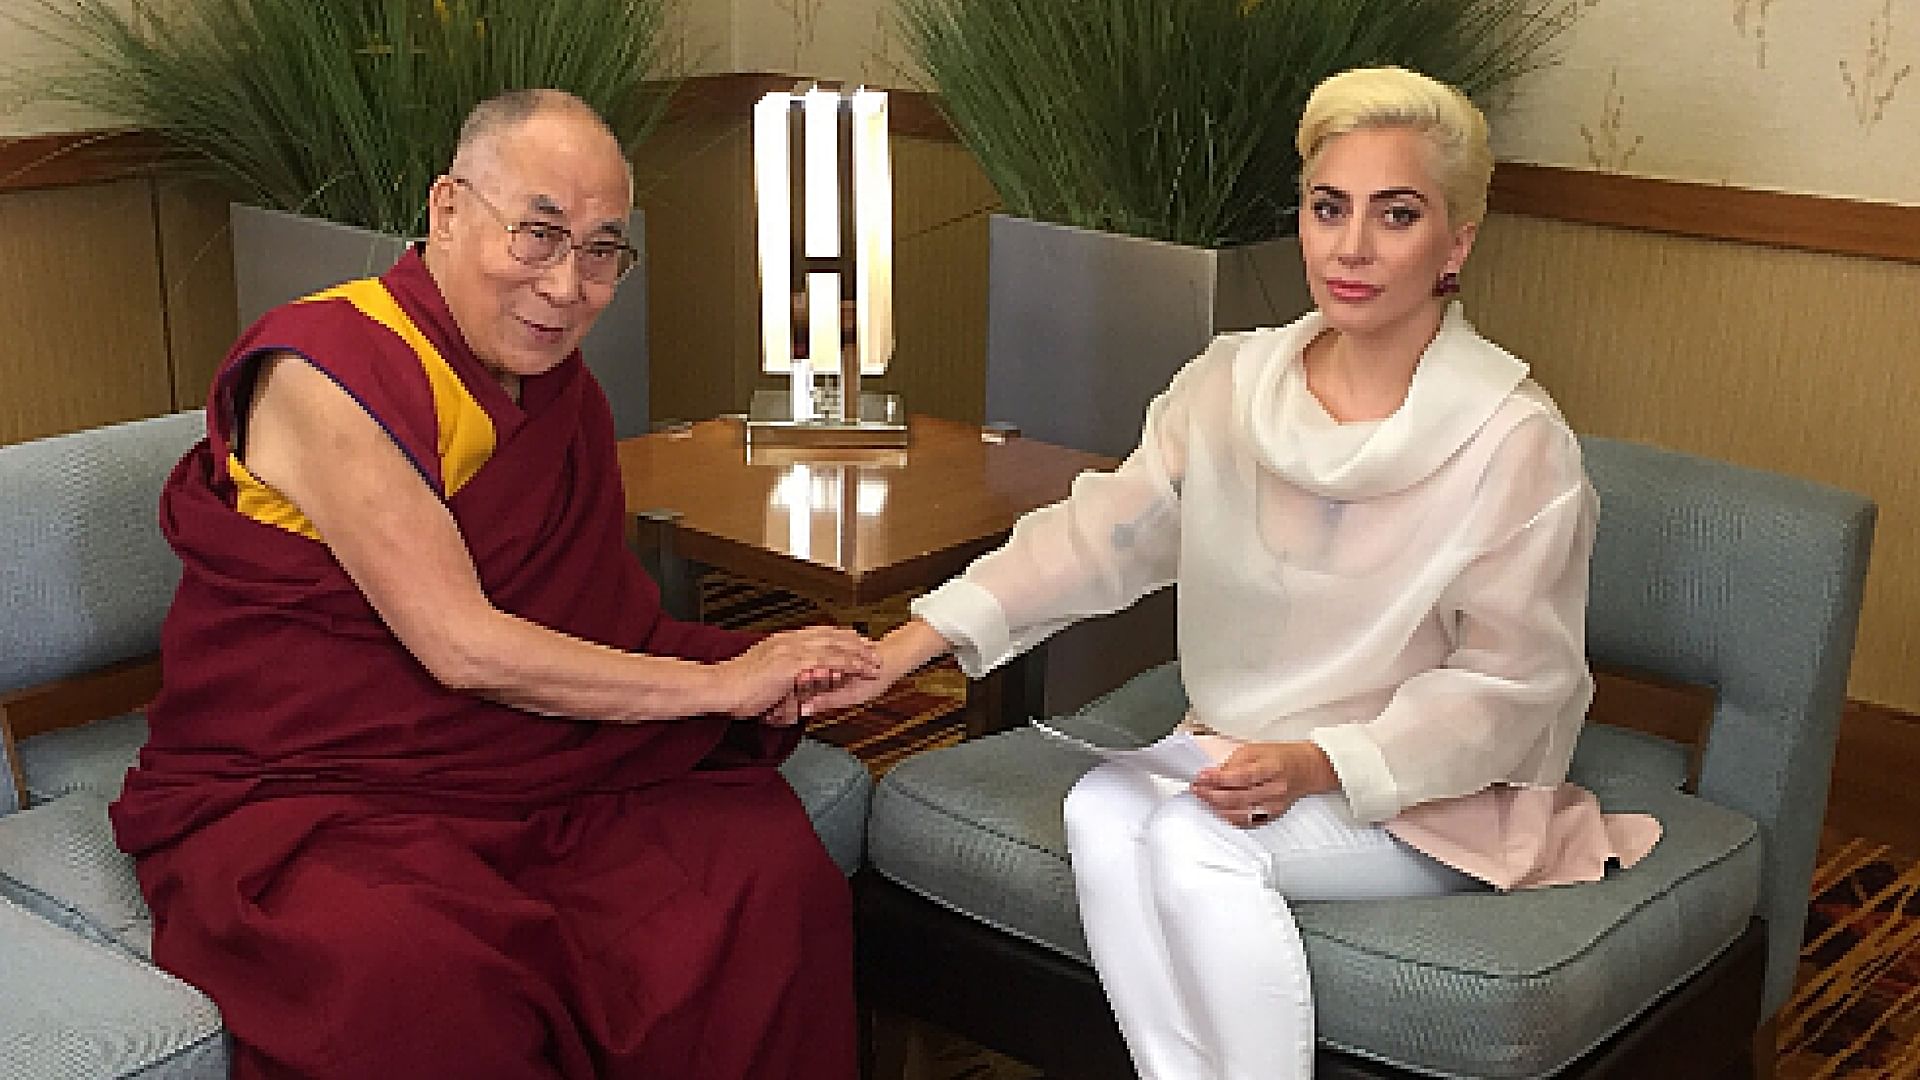 Lady Gaga with the Dalai &nbsp;Lama (Photo: Twitter)